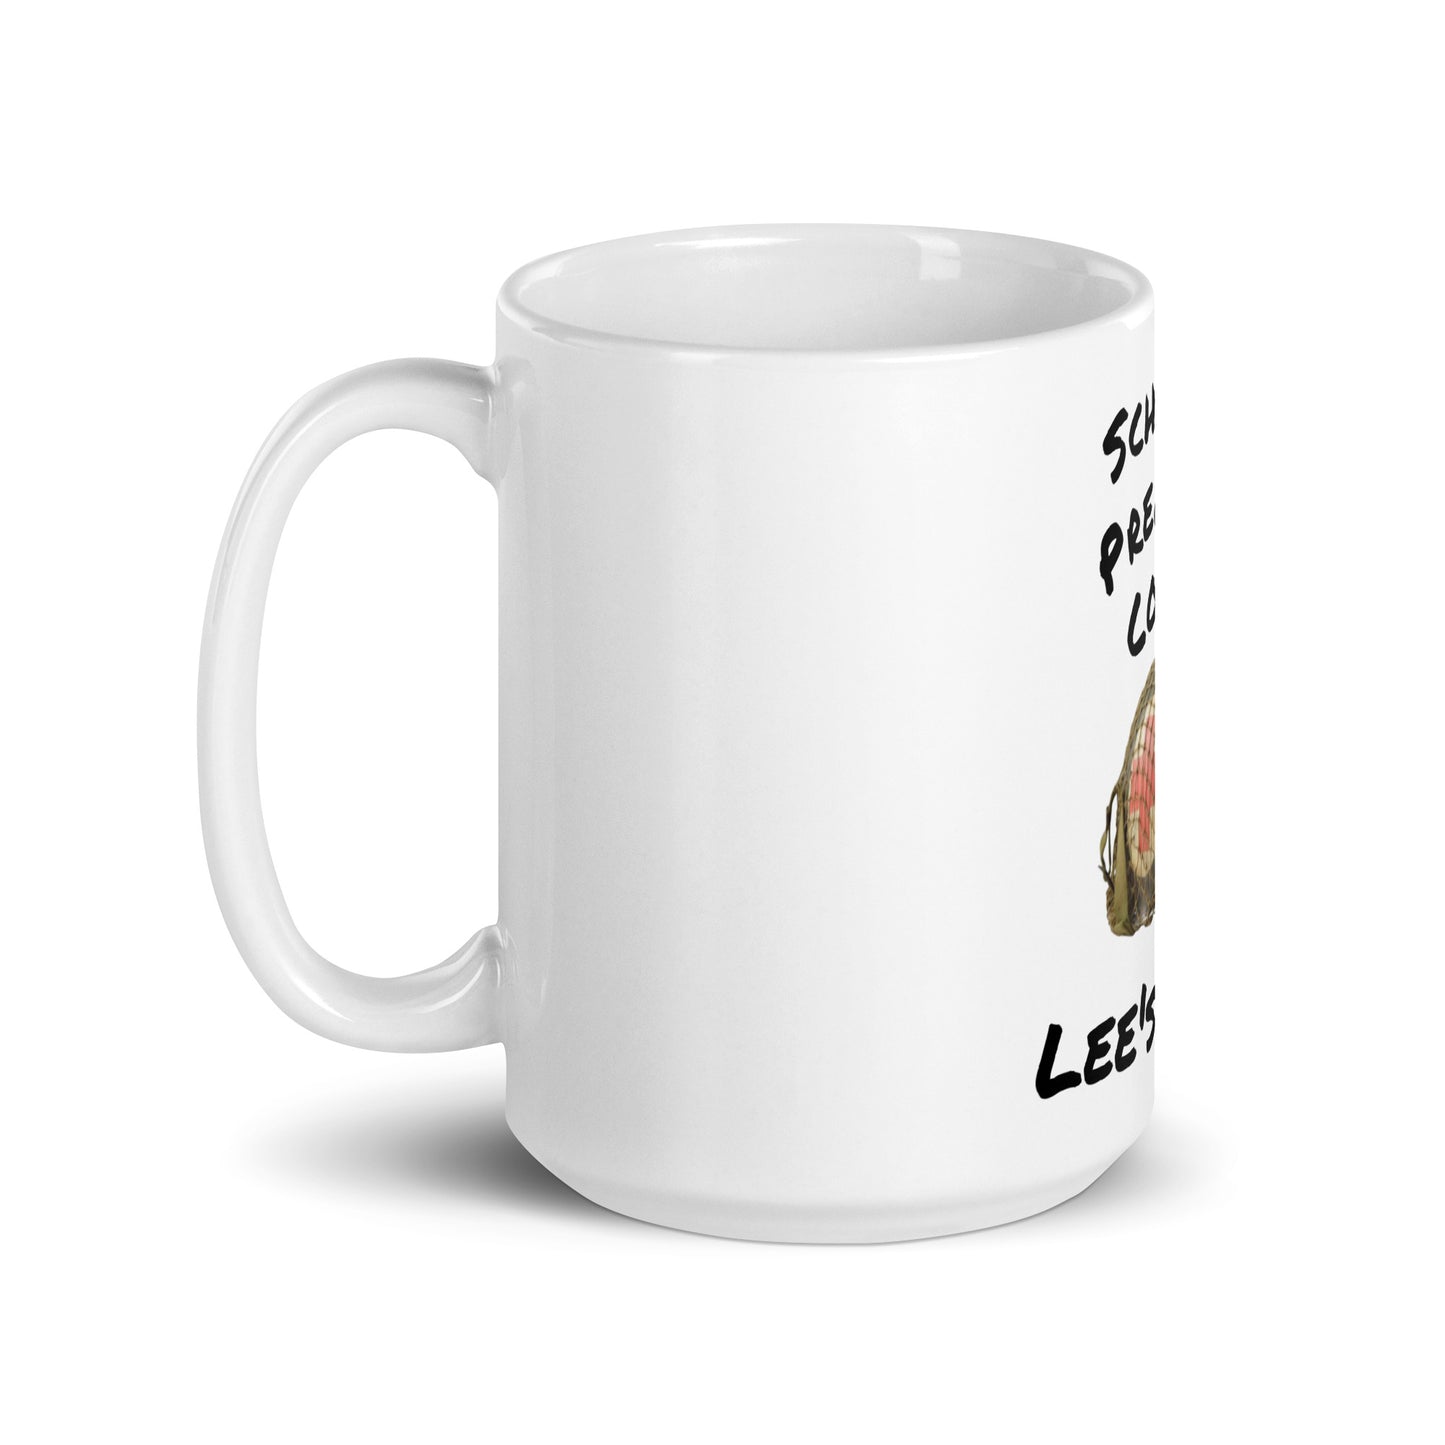 Lee's Blend Coffee Cup